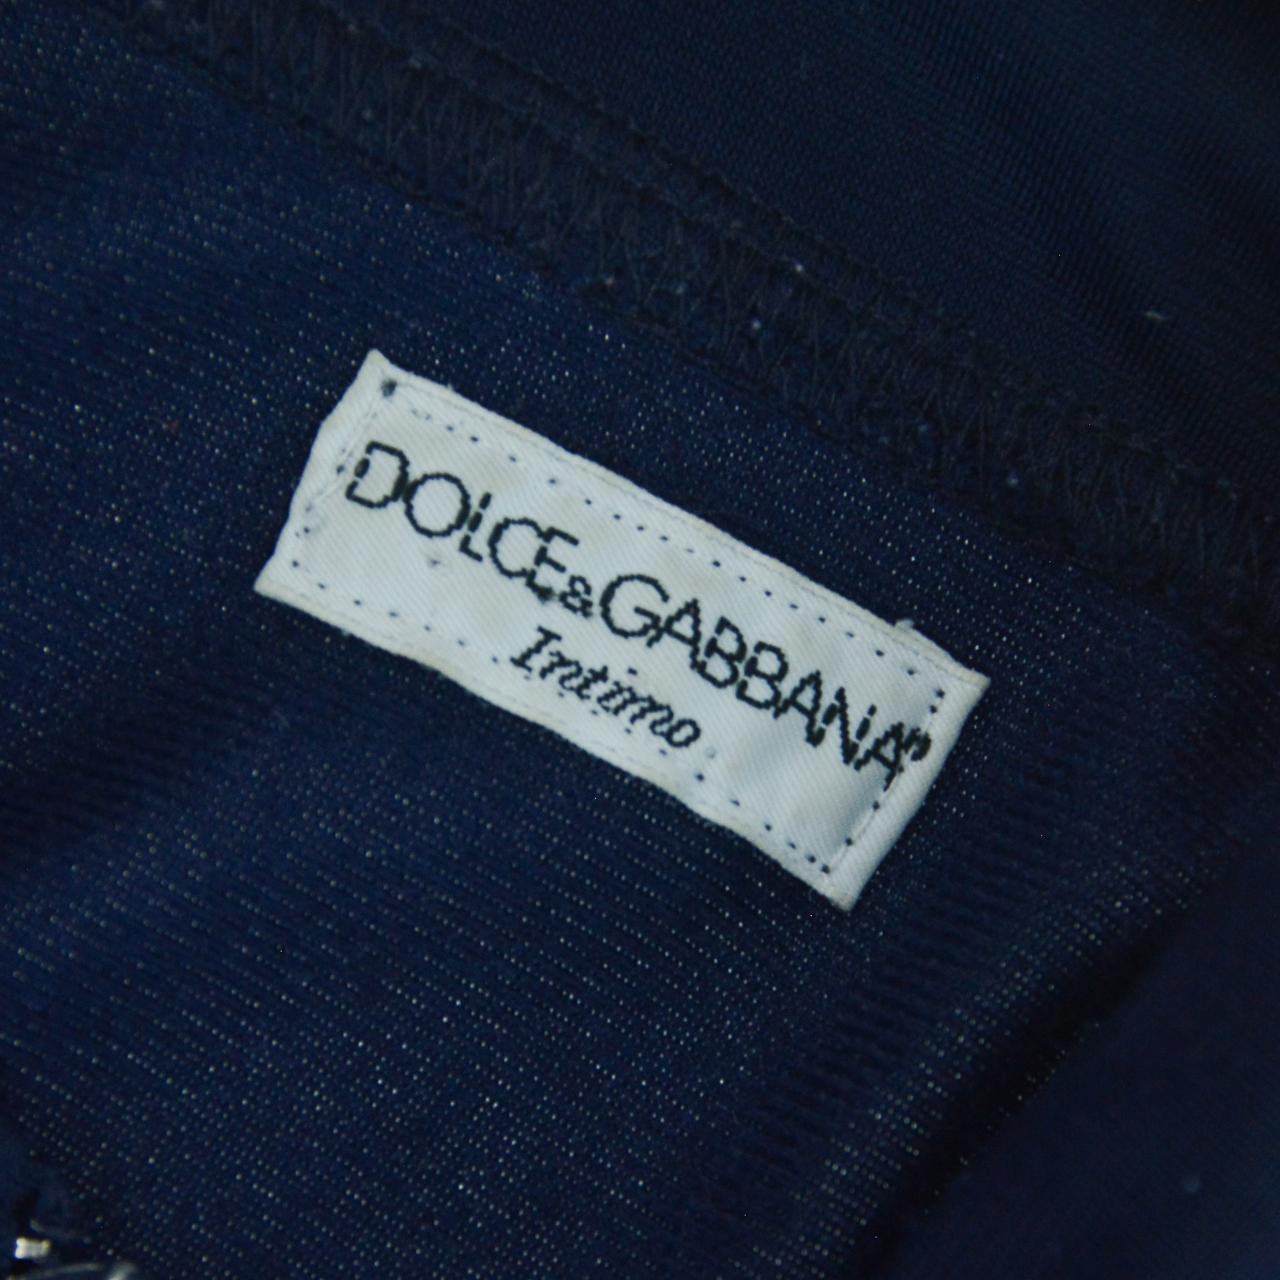 Vintage Dolce & Gabbana Athletics Jacket Size M - Known Source